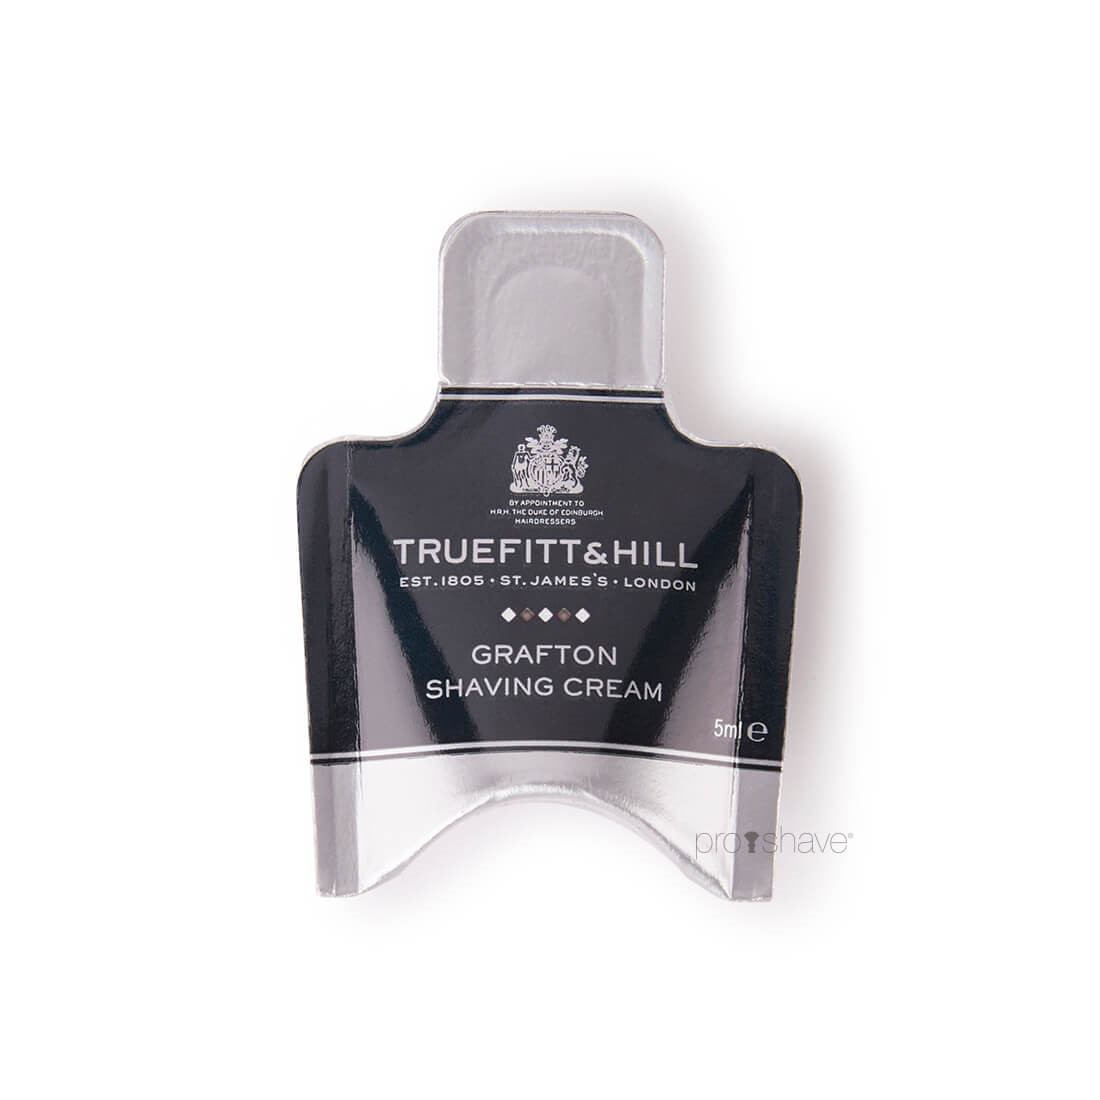 Billede af Truefitt & Hill Grafton Shaving Cream Sample Pack, 5 ml.